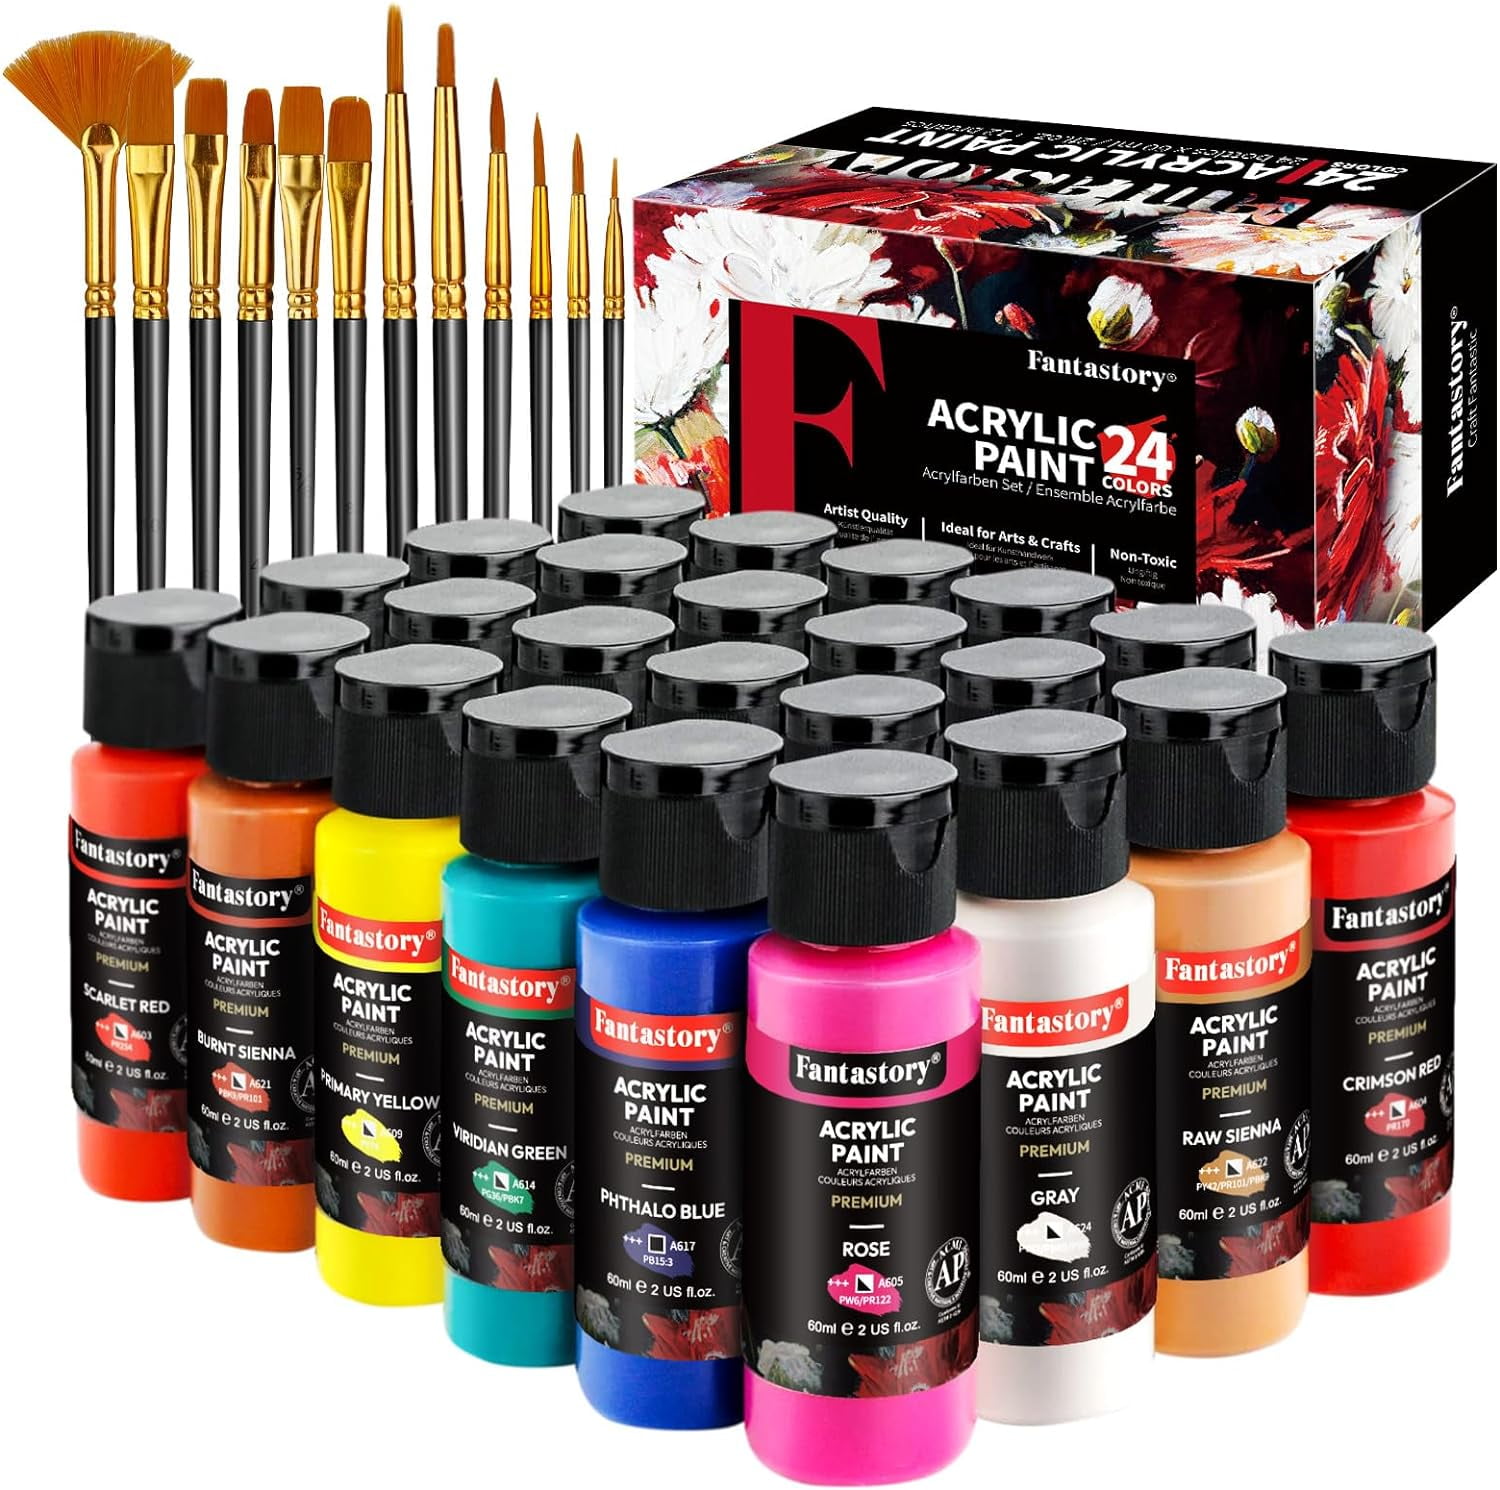 80 Colors Acrylic Paint, Shuttle Art Acrylic Paint set with 12 Paint  Brushes, 2oz/60ml Bottles, Rich Pigmented, Water Proof, Premium Paints for